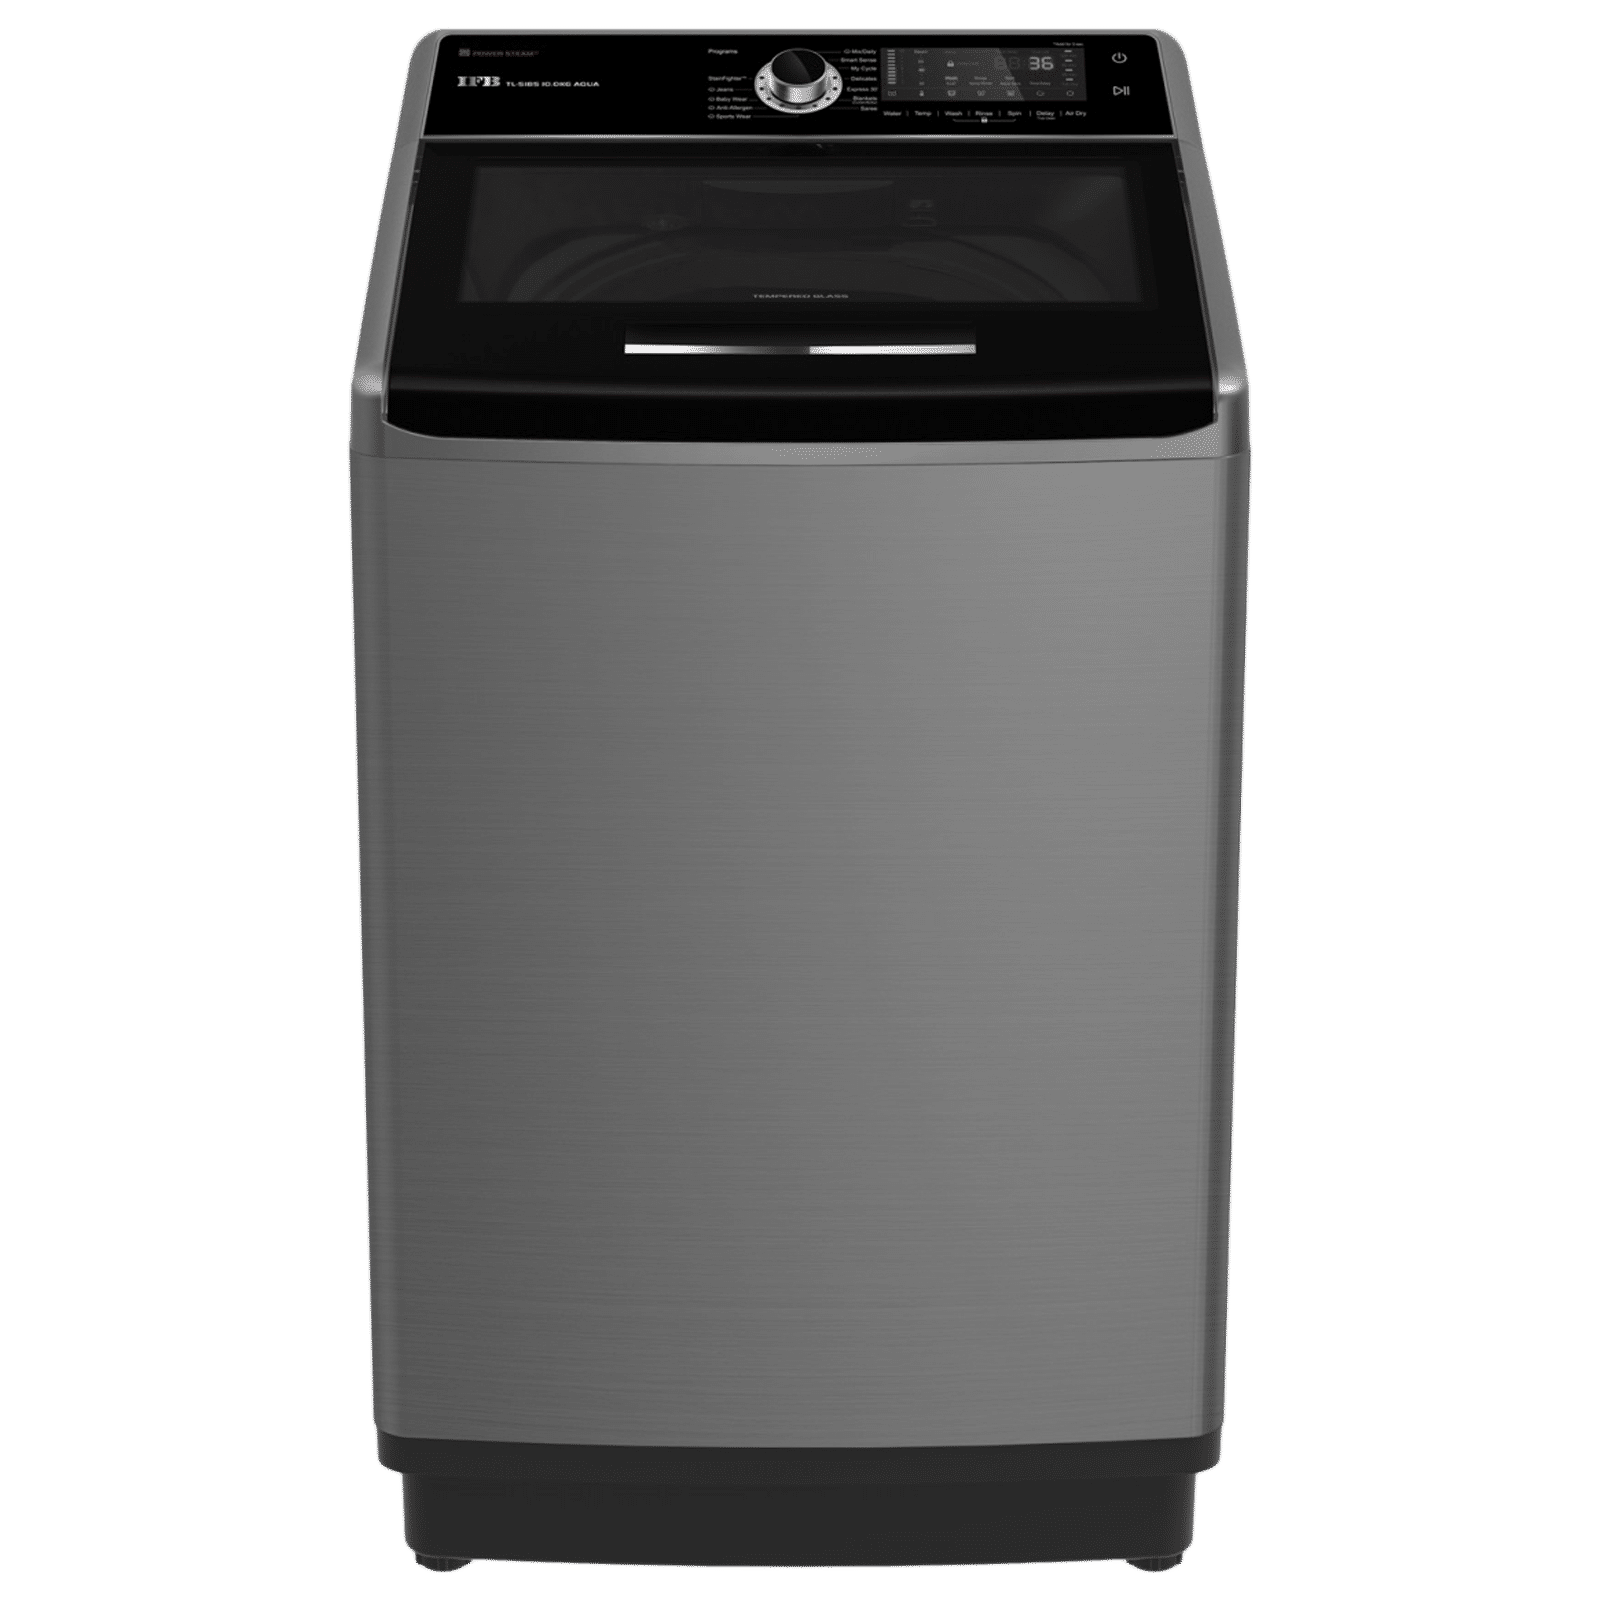 Buy IFB 10 kg 5 Star Fully Automatic Top Load Washing Machine (Aqua, TL-SIBS, Steam Wash Technology, Inox) Online - Croma